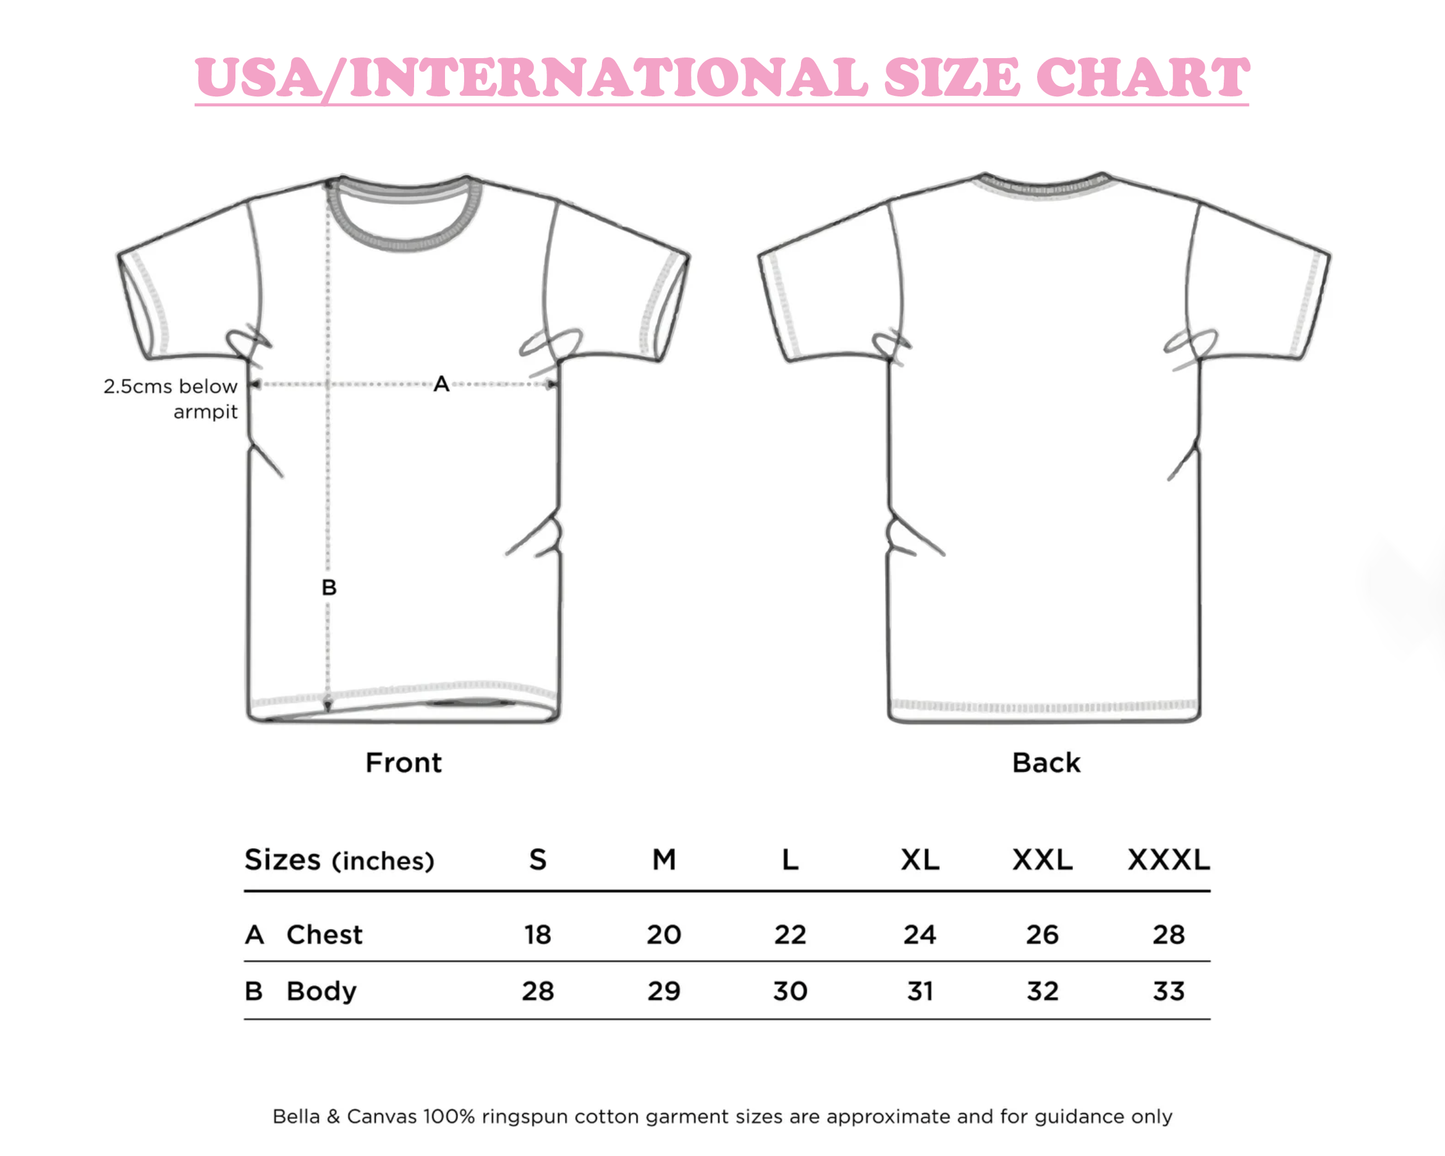 Poetic Betty™ Black Pink Metalcore Logo 100% Cotton Unisex T-Shirt